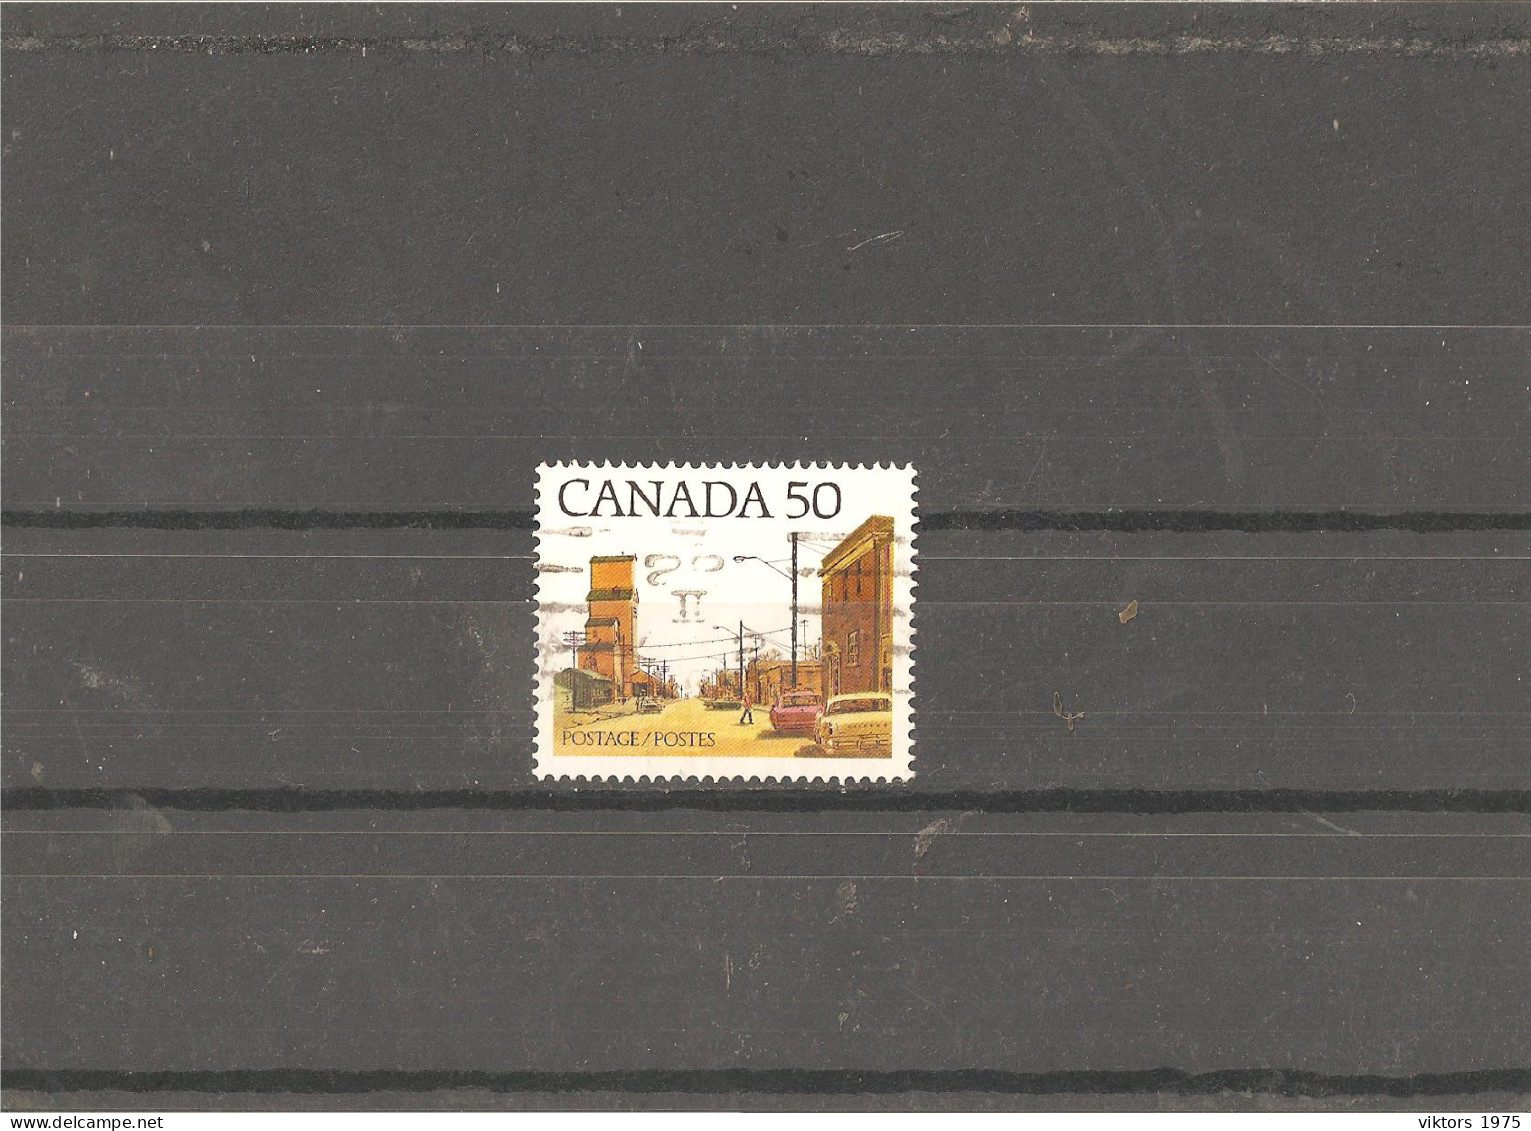 Used Stamp Nr.809 In Darnell Catalog - Usados